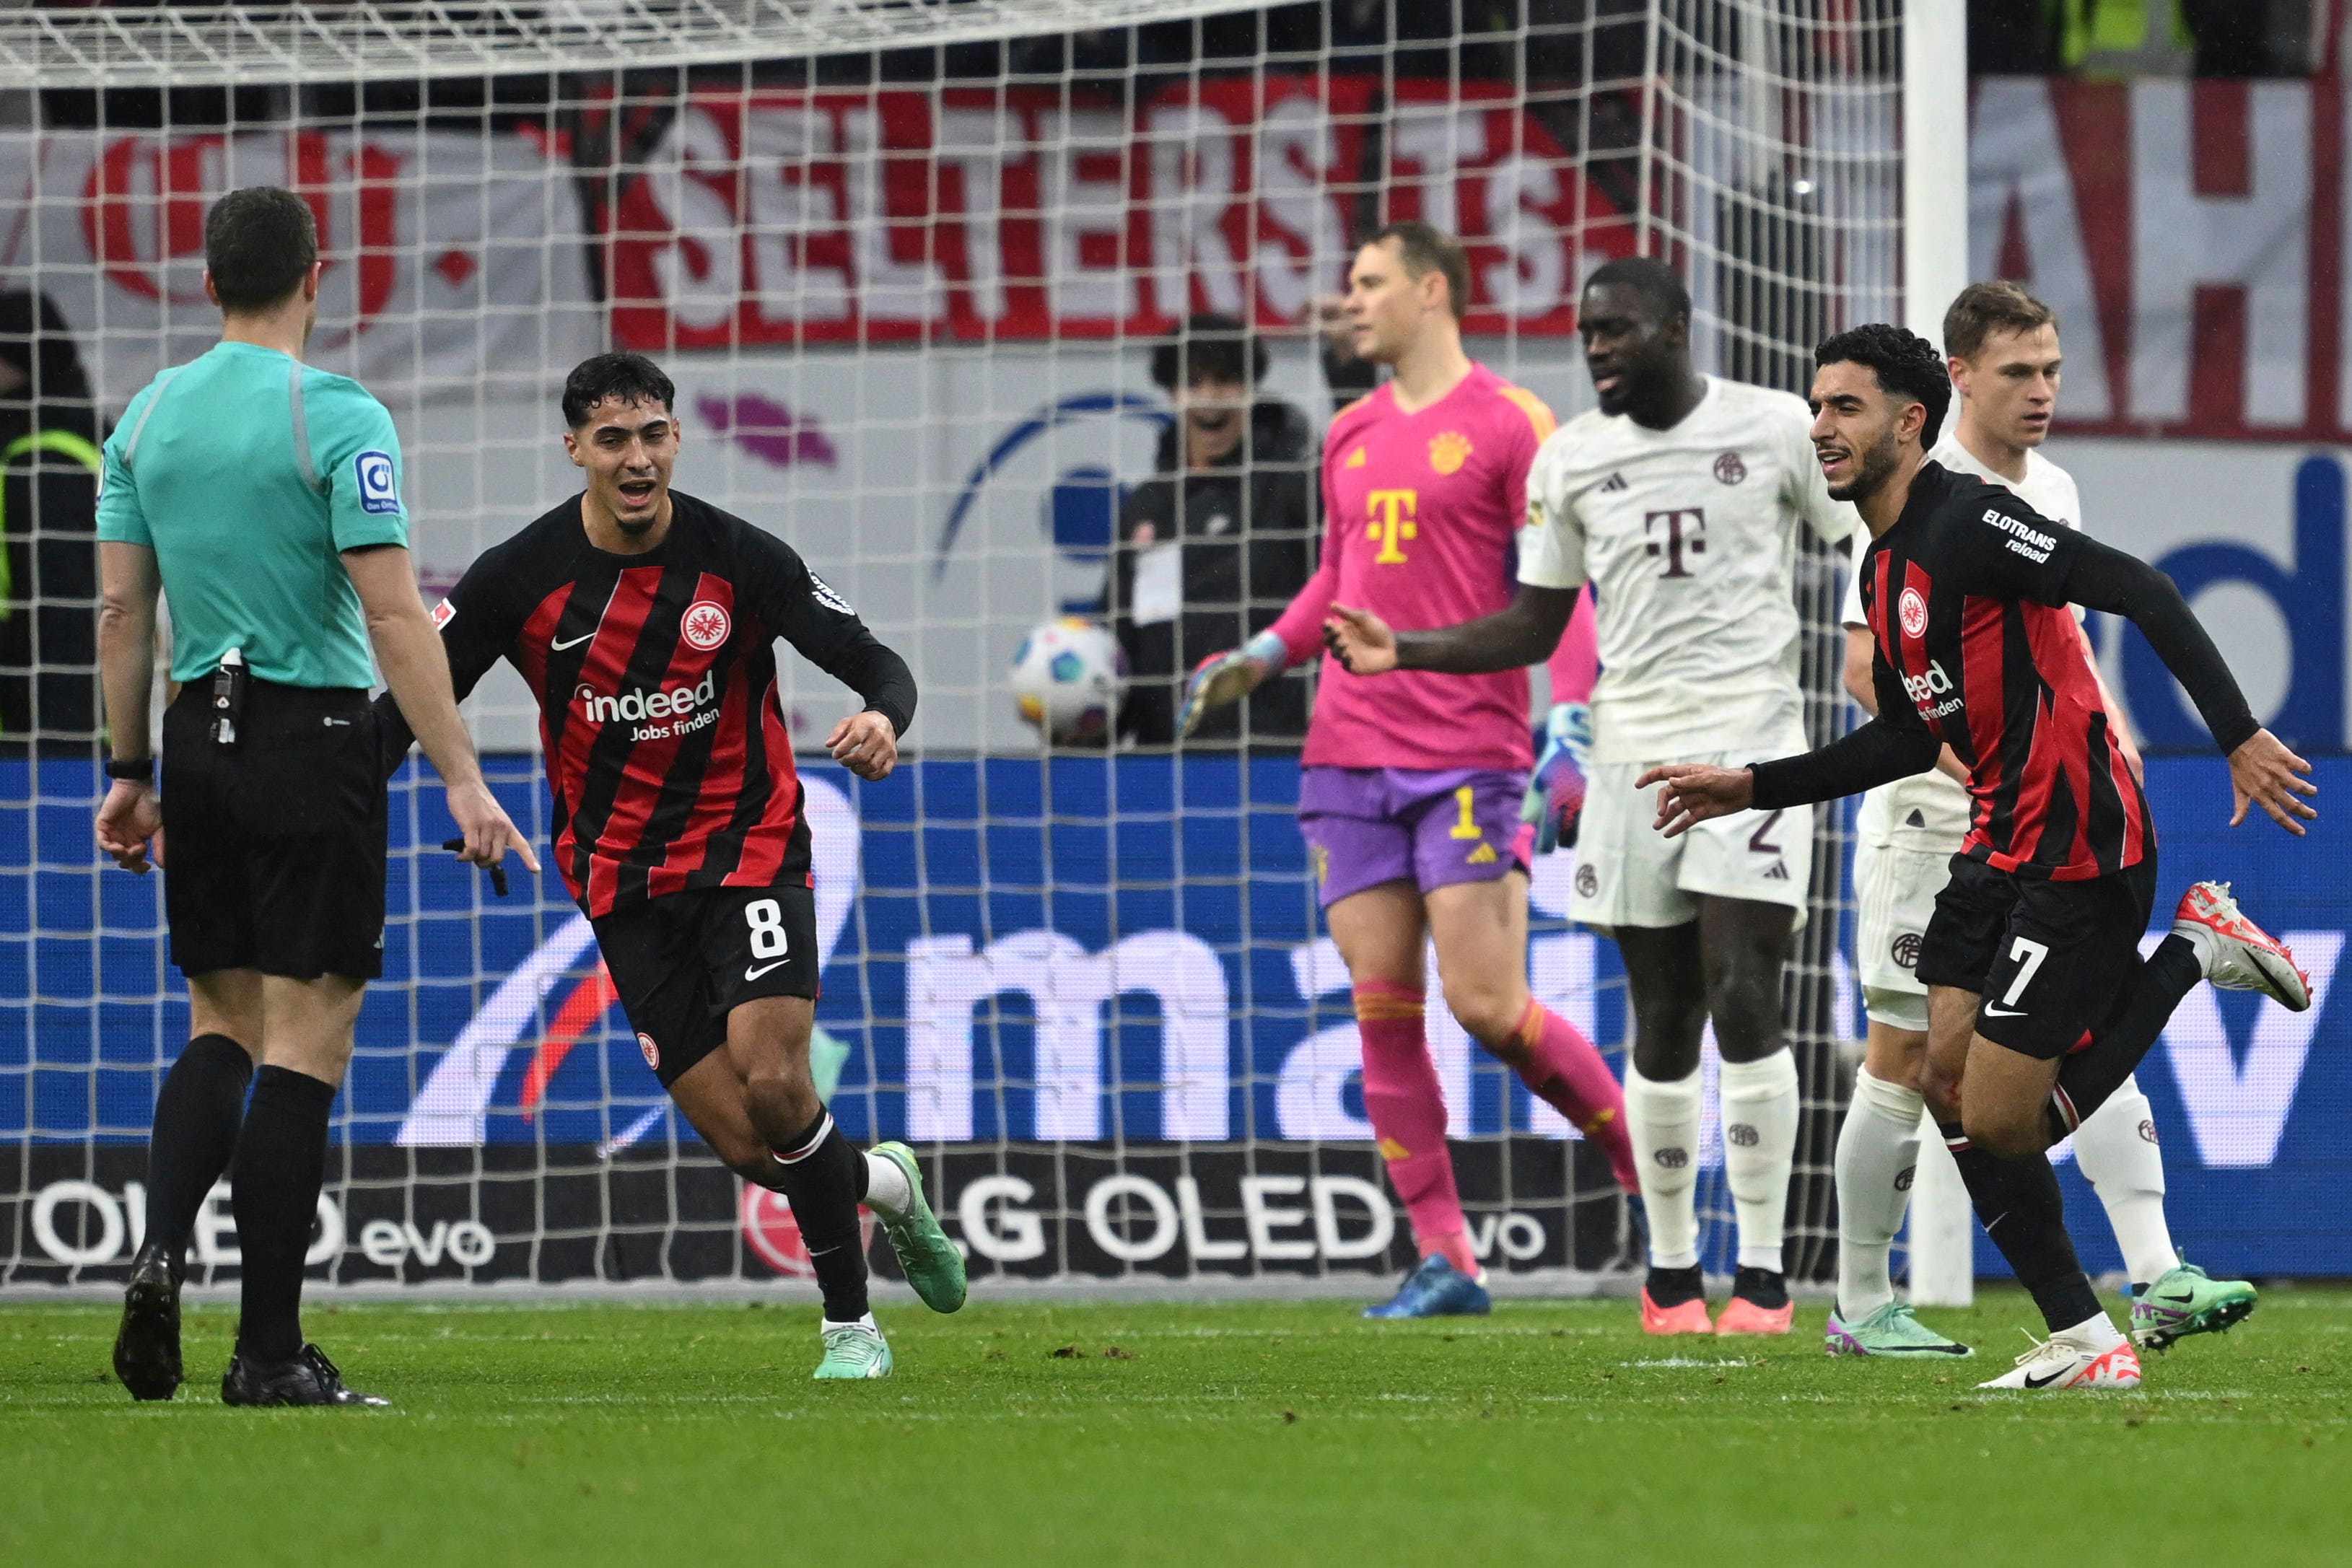 Goalkeeper Manuel Neuer is beaten again in Bayern Munich’s 5-1 Bundesliga defeat to Eintracht Frankfurt (Arne Dedert/dpa via AP)